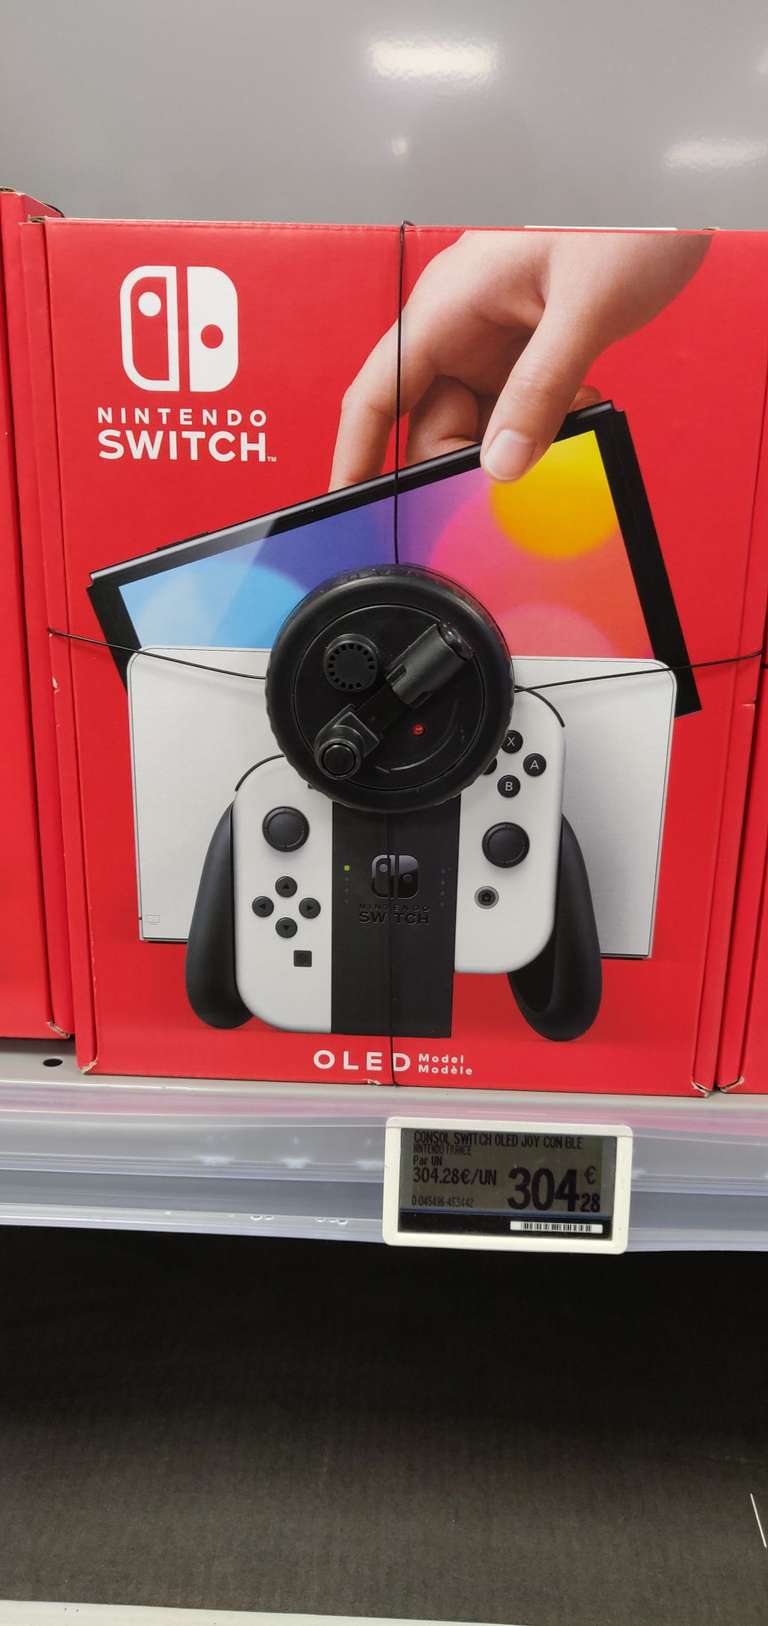 Console Nintendo Switch OLED - Saint Martin d'Hères (38)